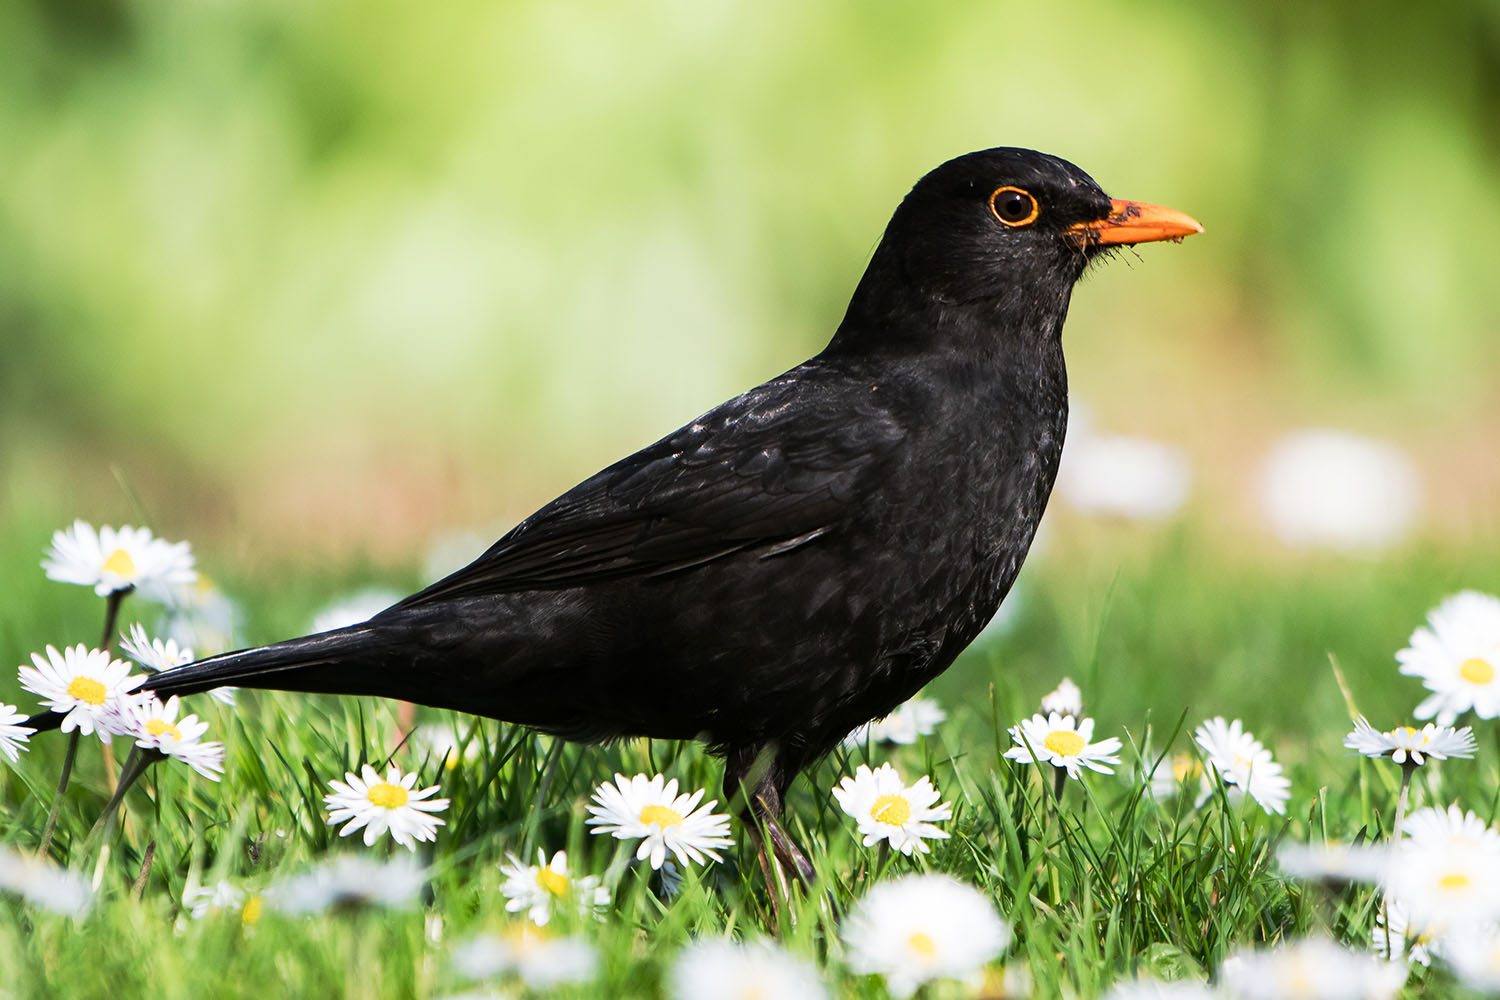 Blackbird standing in a daisy field